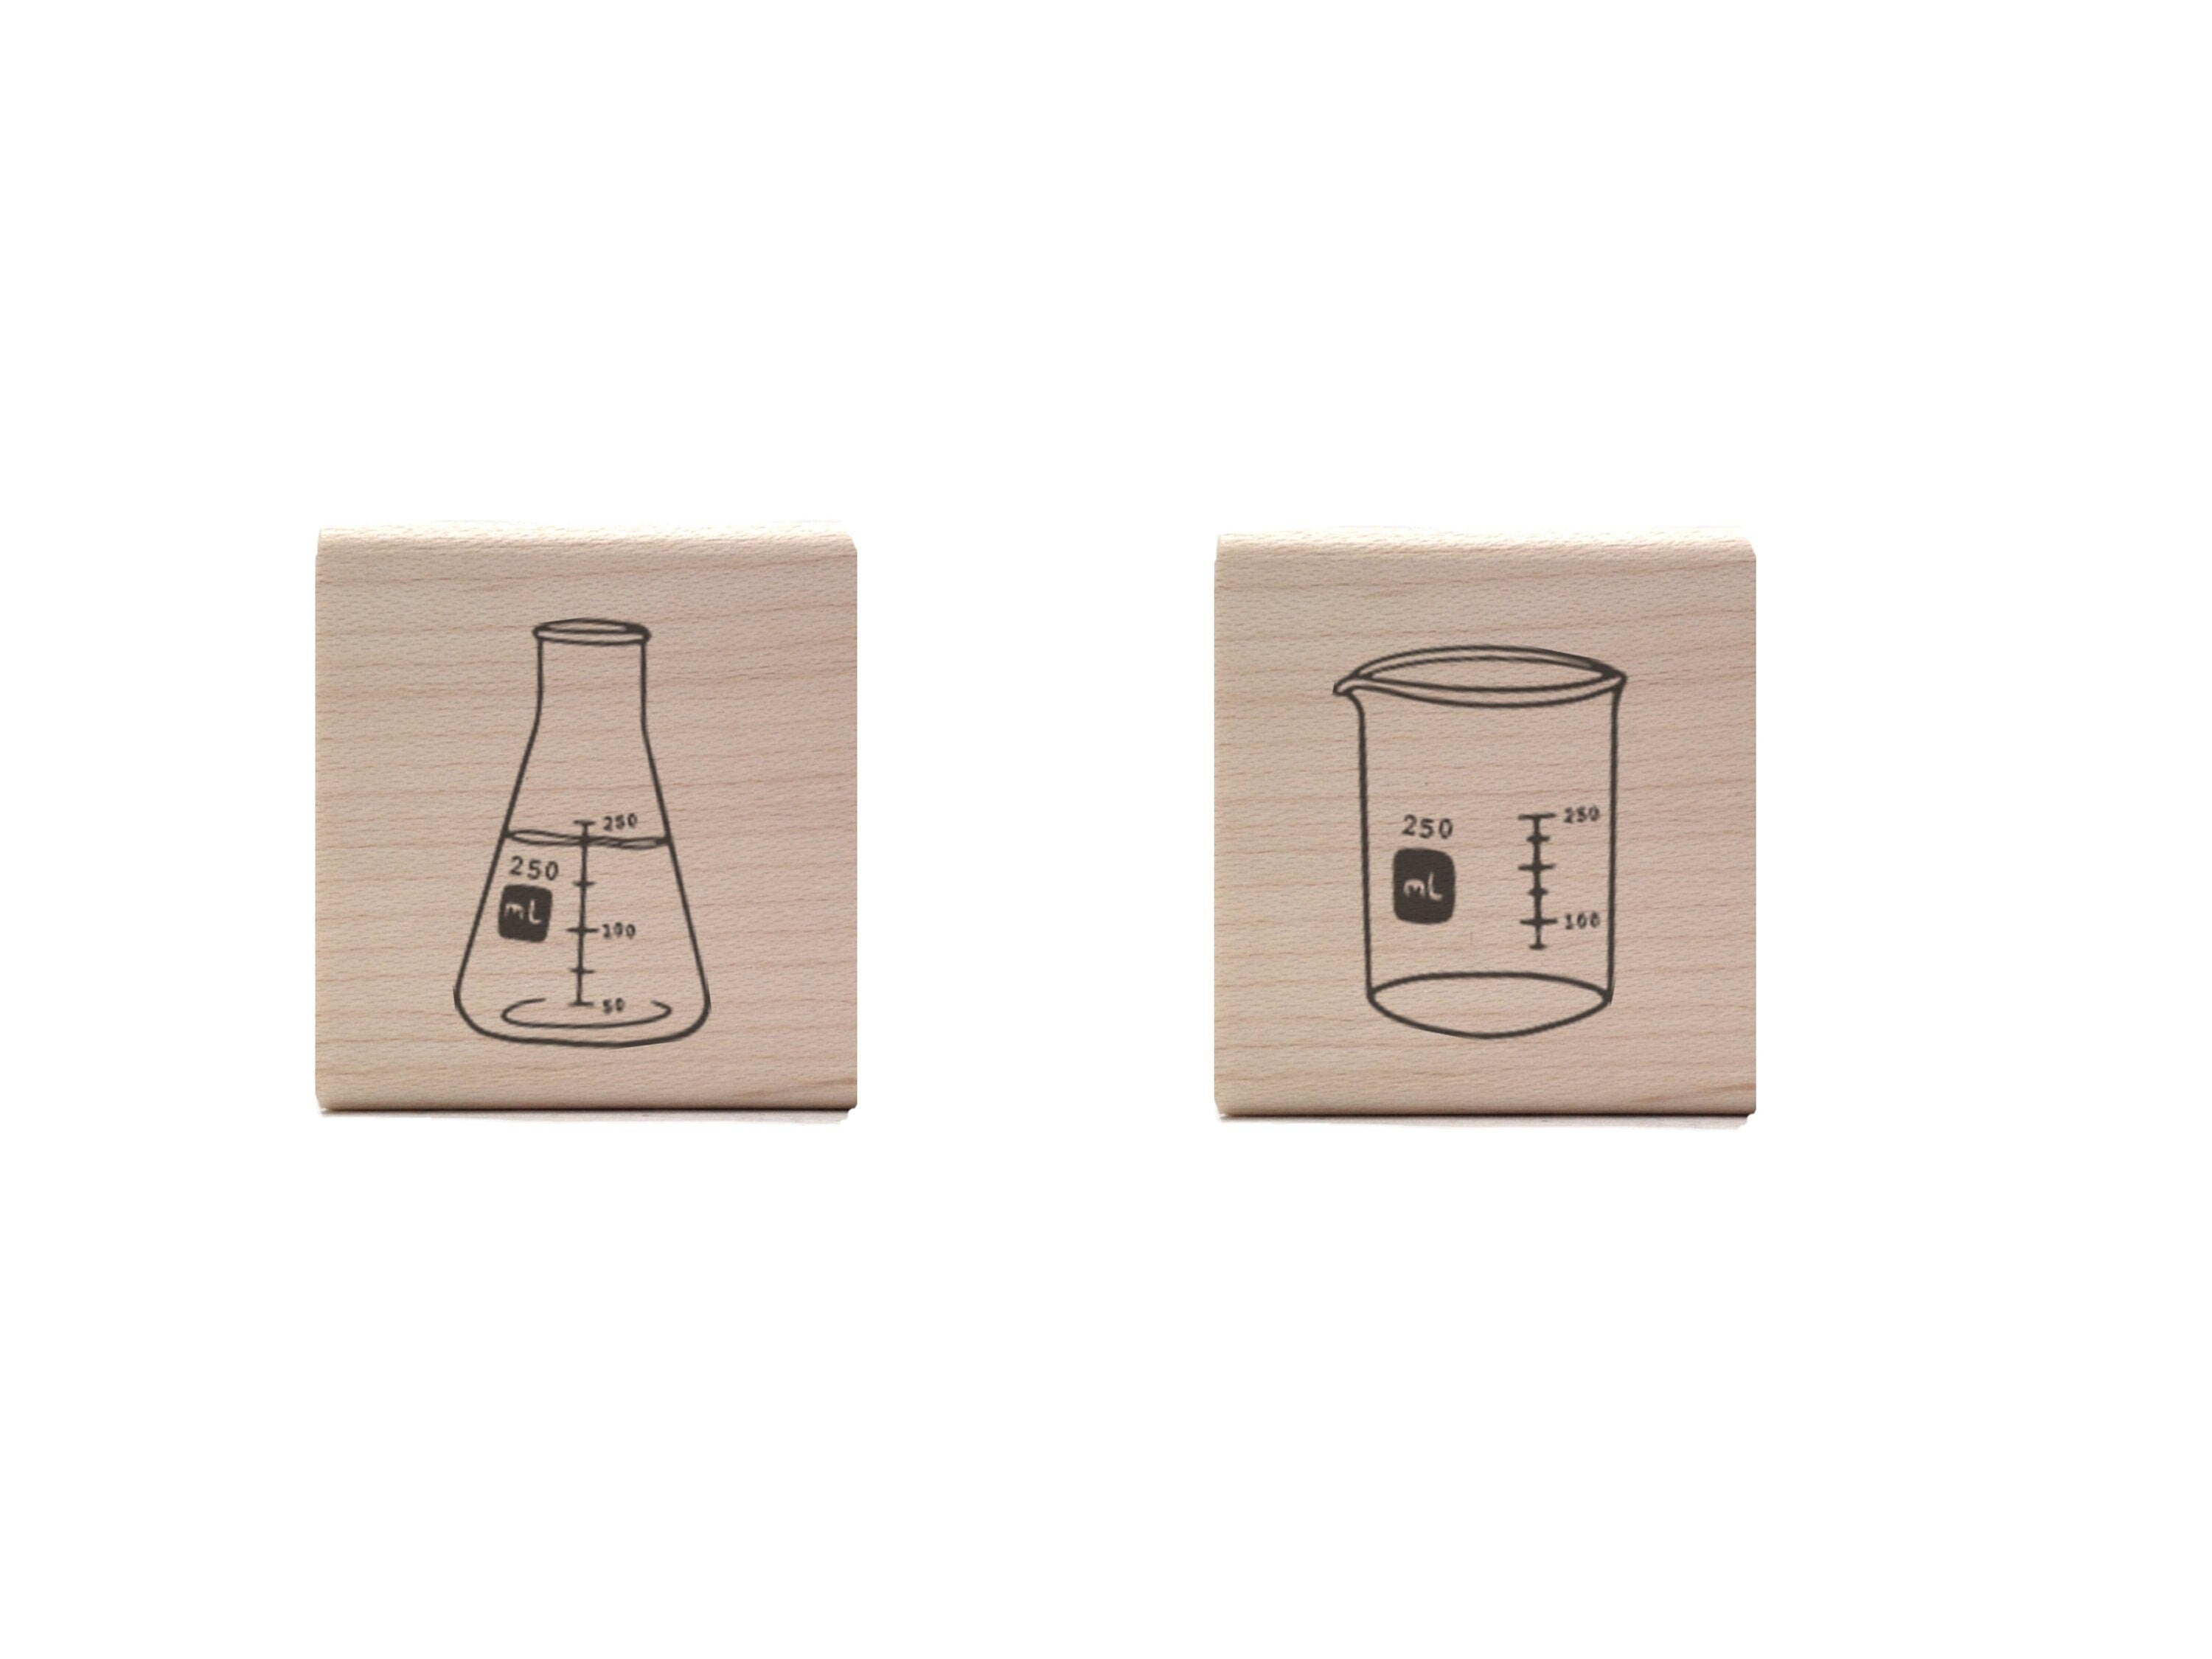 Erlenmeyer Flask Rubber Stamp - Chemistry Lab Stationery - STEM / Science Teacher Stamp